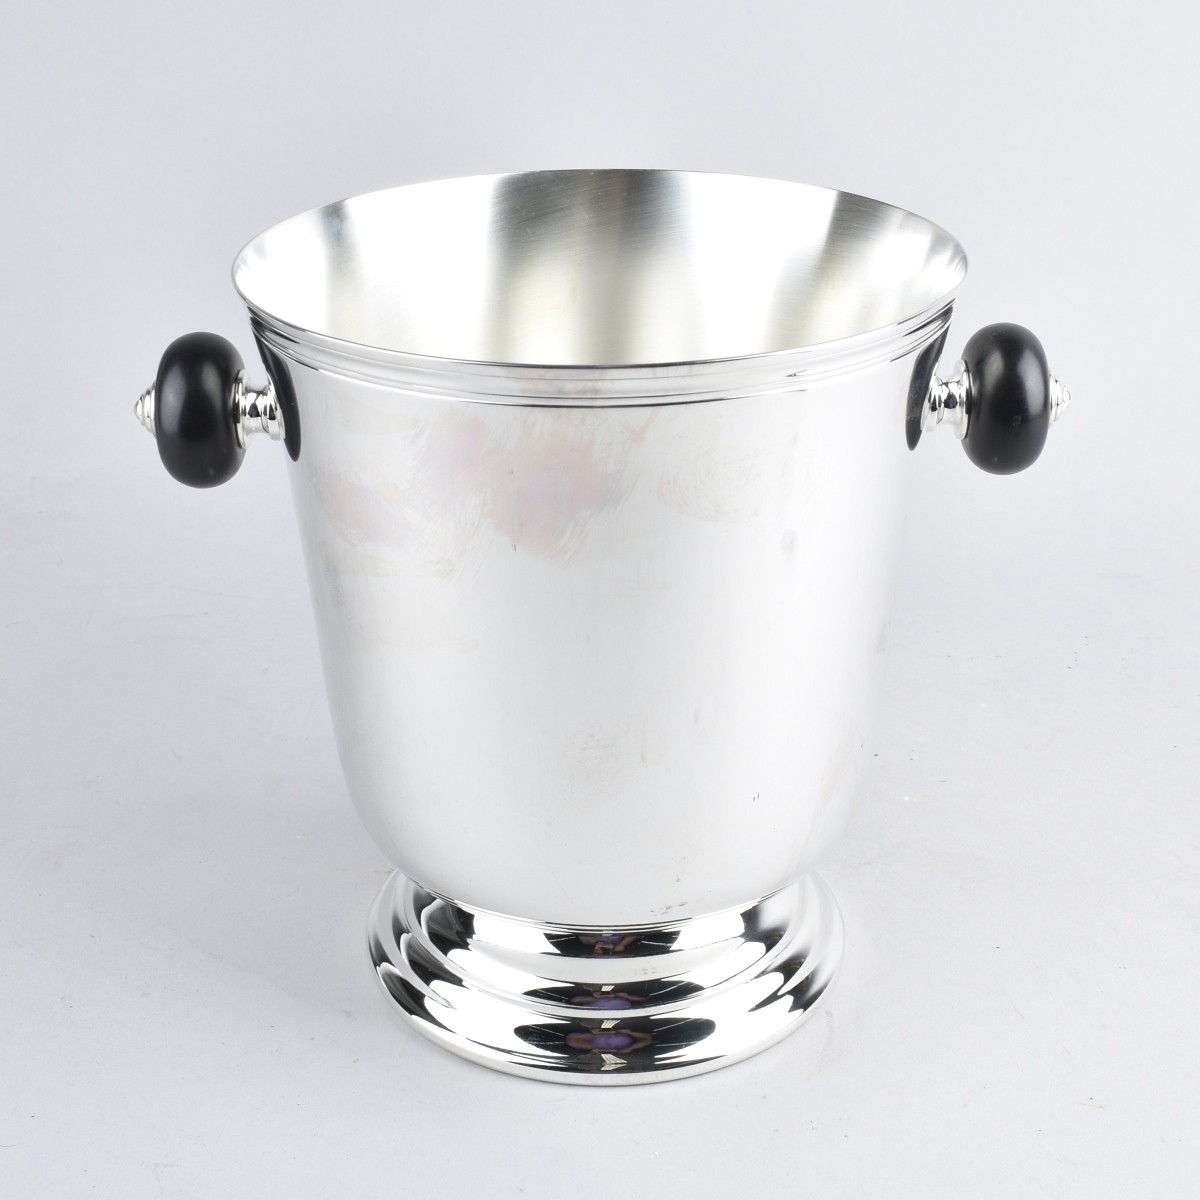 Christofle Champagne Ice Bucket